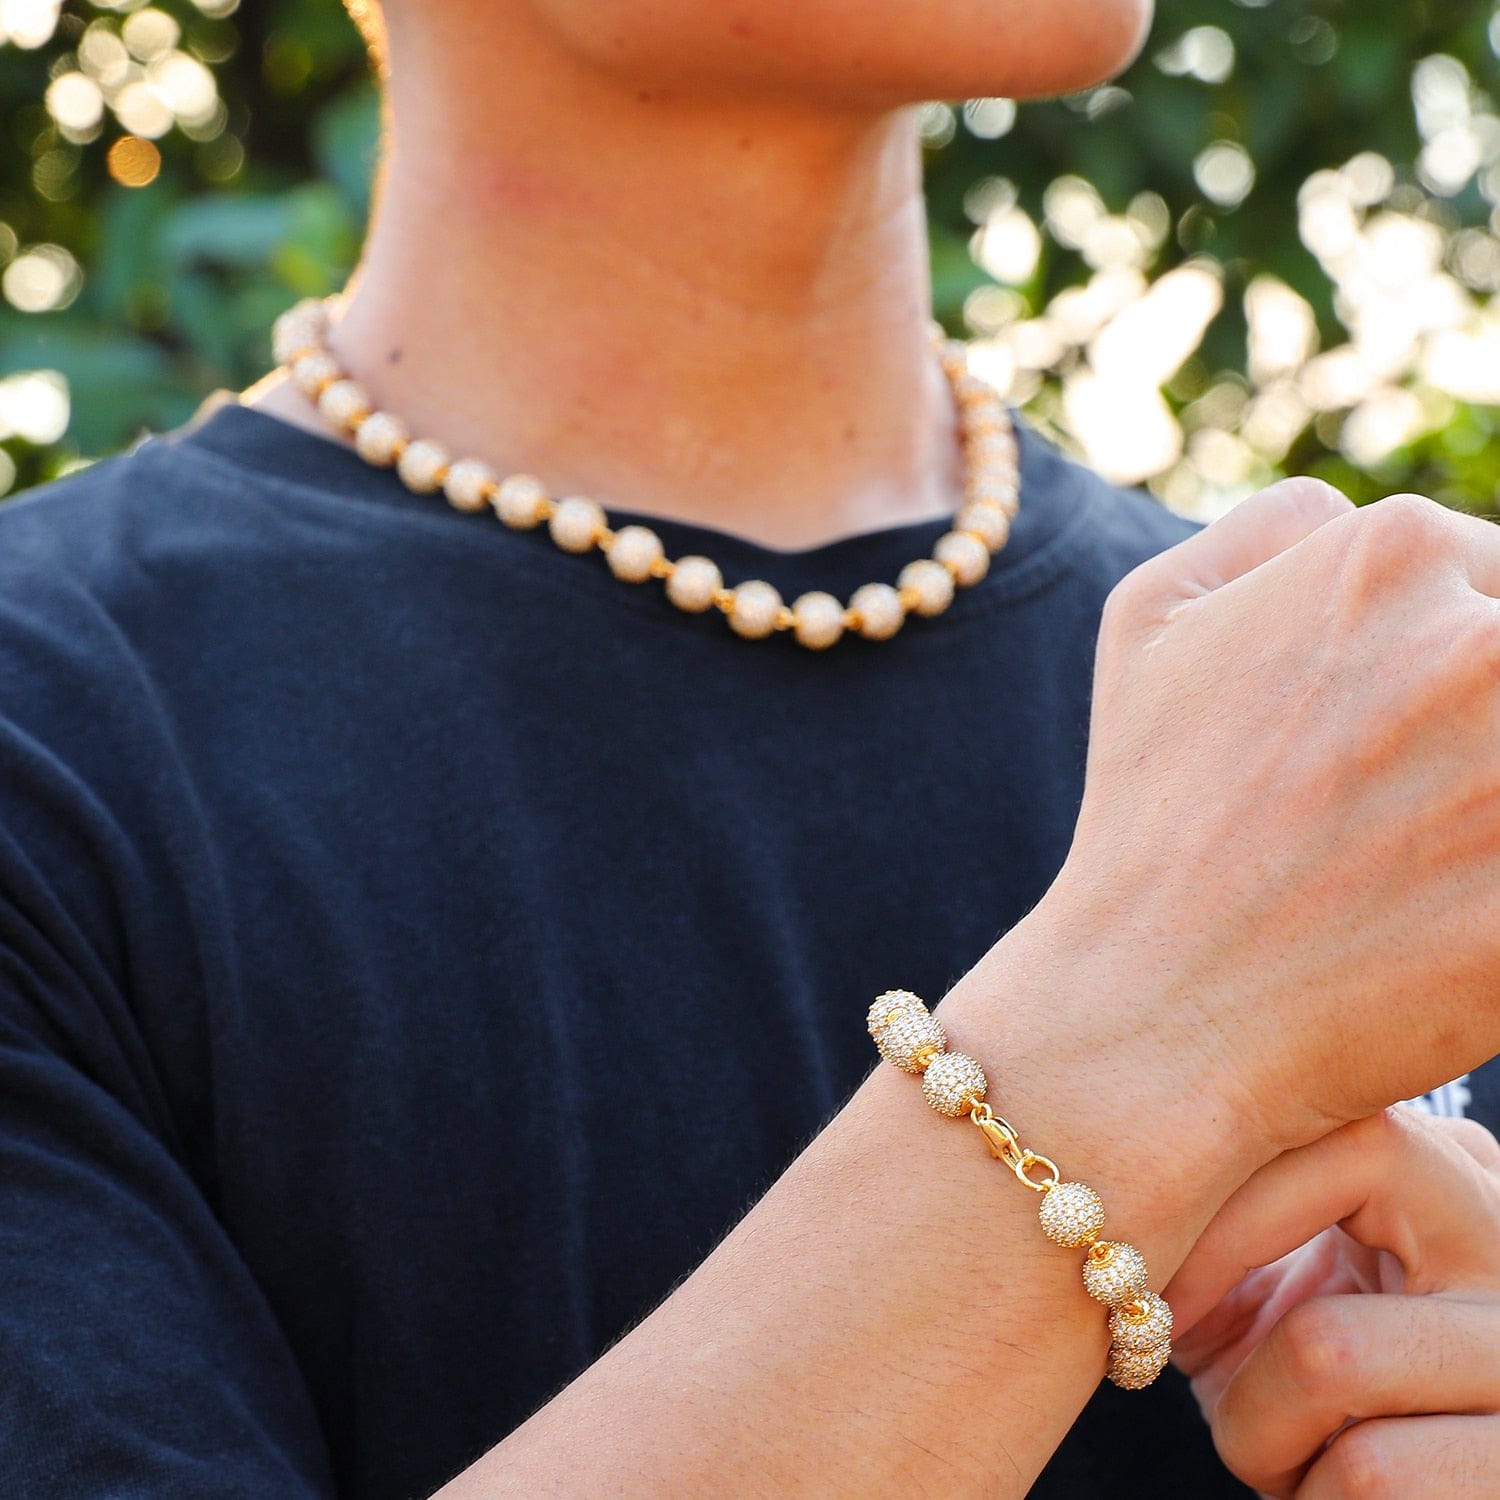 VVS Jewelry hip hop jewelry Gold Chain + Bracelet / 18 Inch & 8 Inch 10MM Prong Beads Chain + FREE bracelet